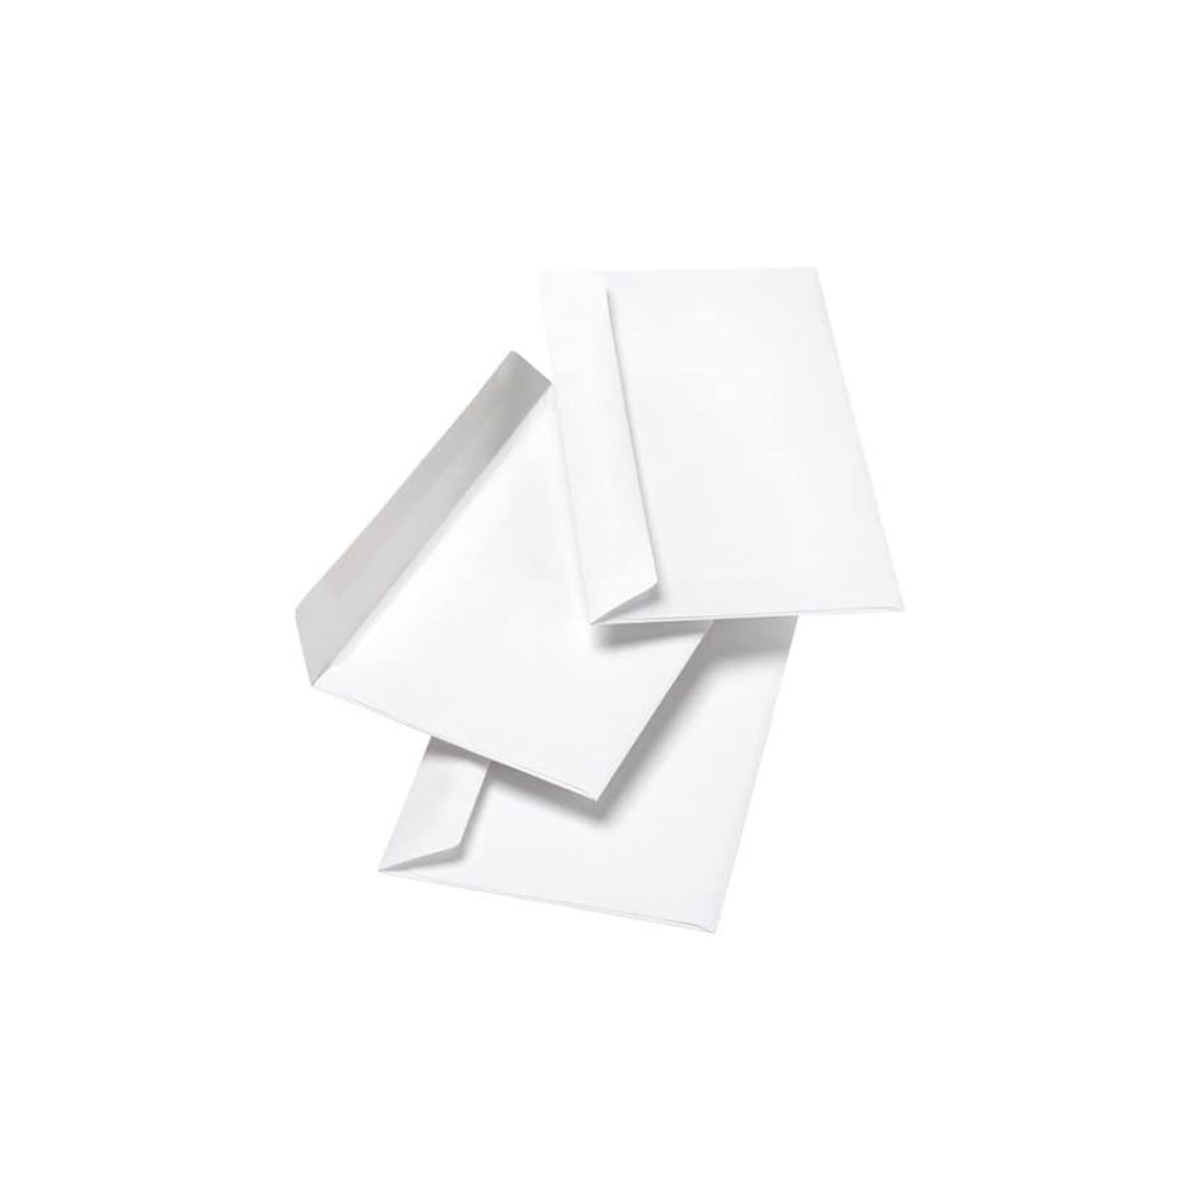 Reskid 6" x 9" Booklet Envelopes, Gummed Seal, for Mailing or Storage, 24 lb White Wove, 500 per Box